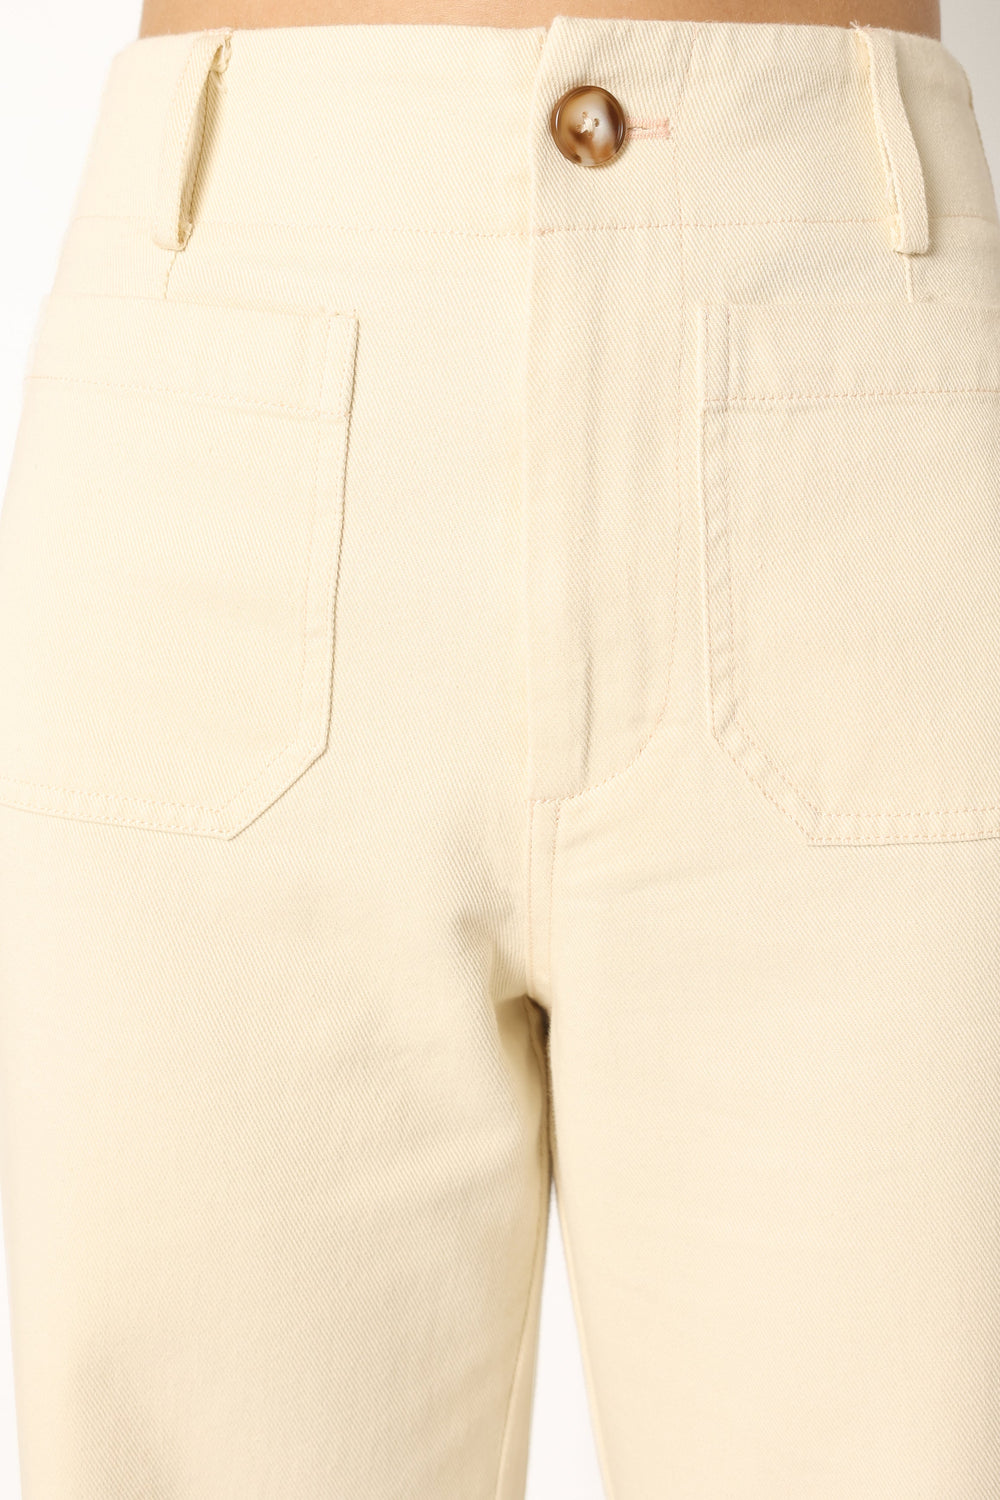 BOTTOMS @Sully Contrast Stitch Denim Jeans - Ecru